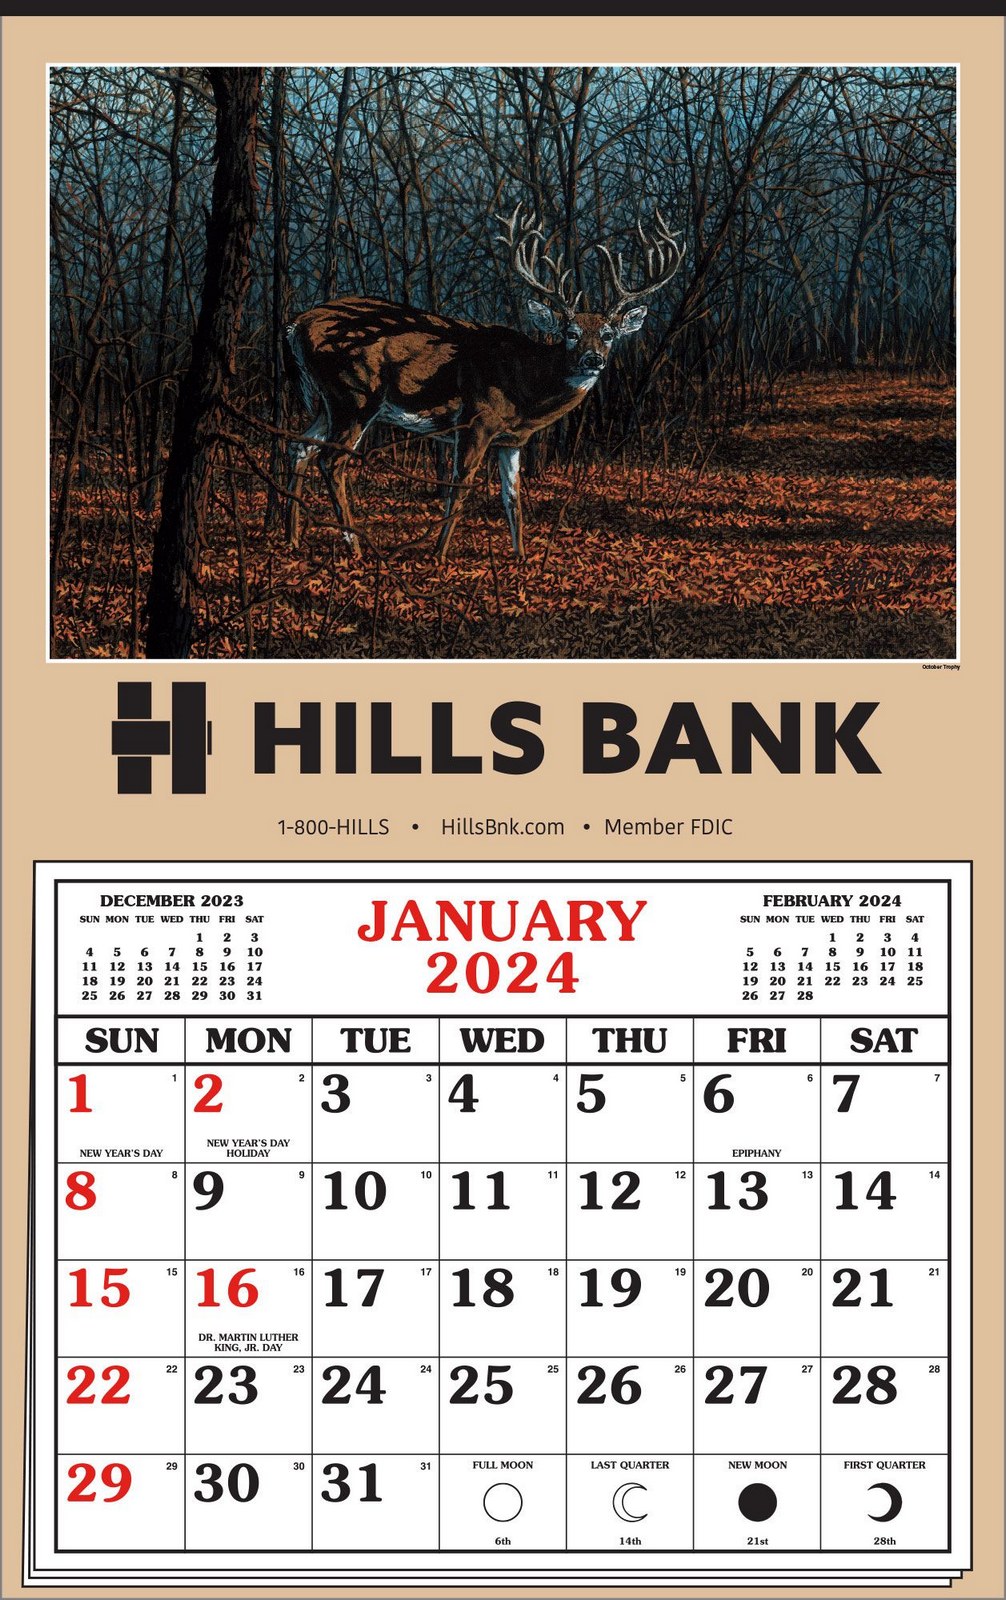 Large Full Apron Hanger Calendar Larry Anderson Wildlife 